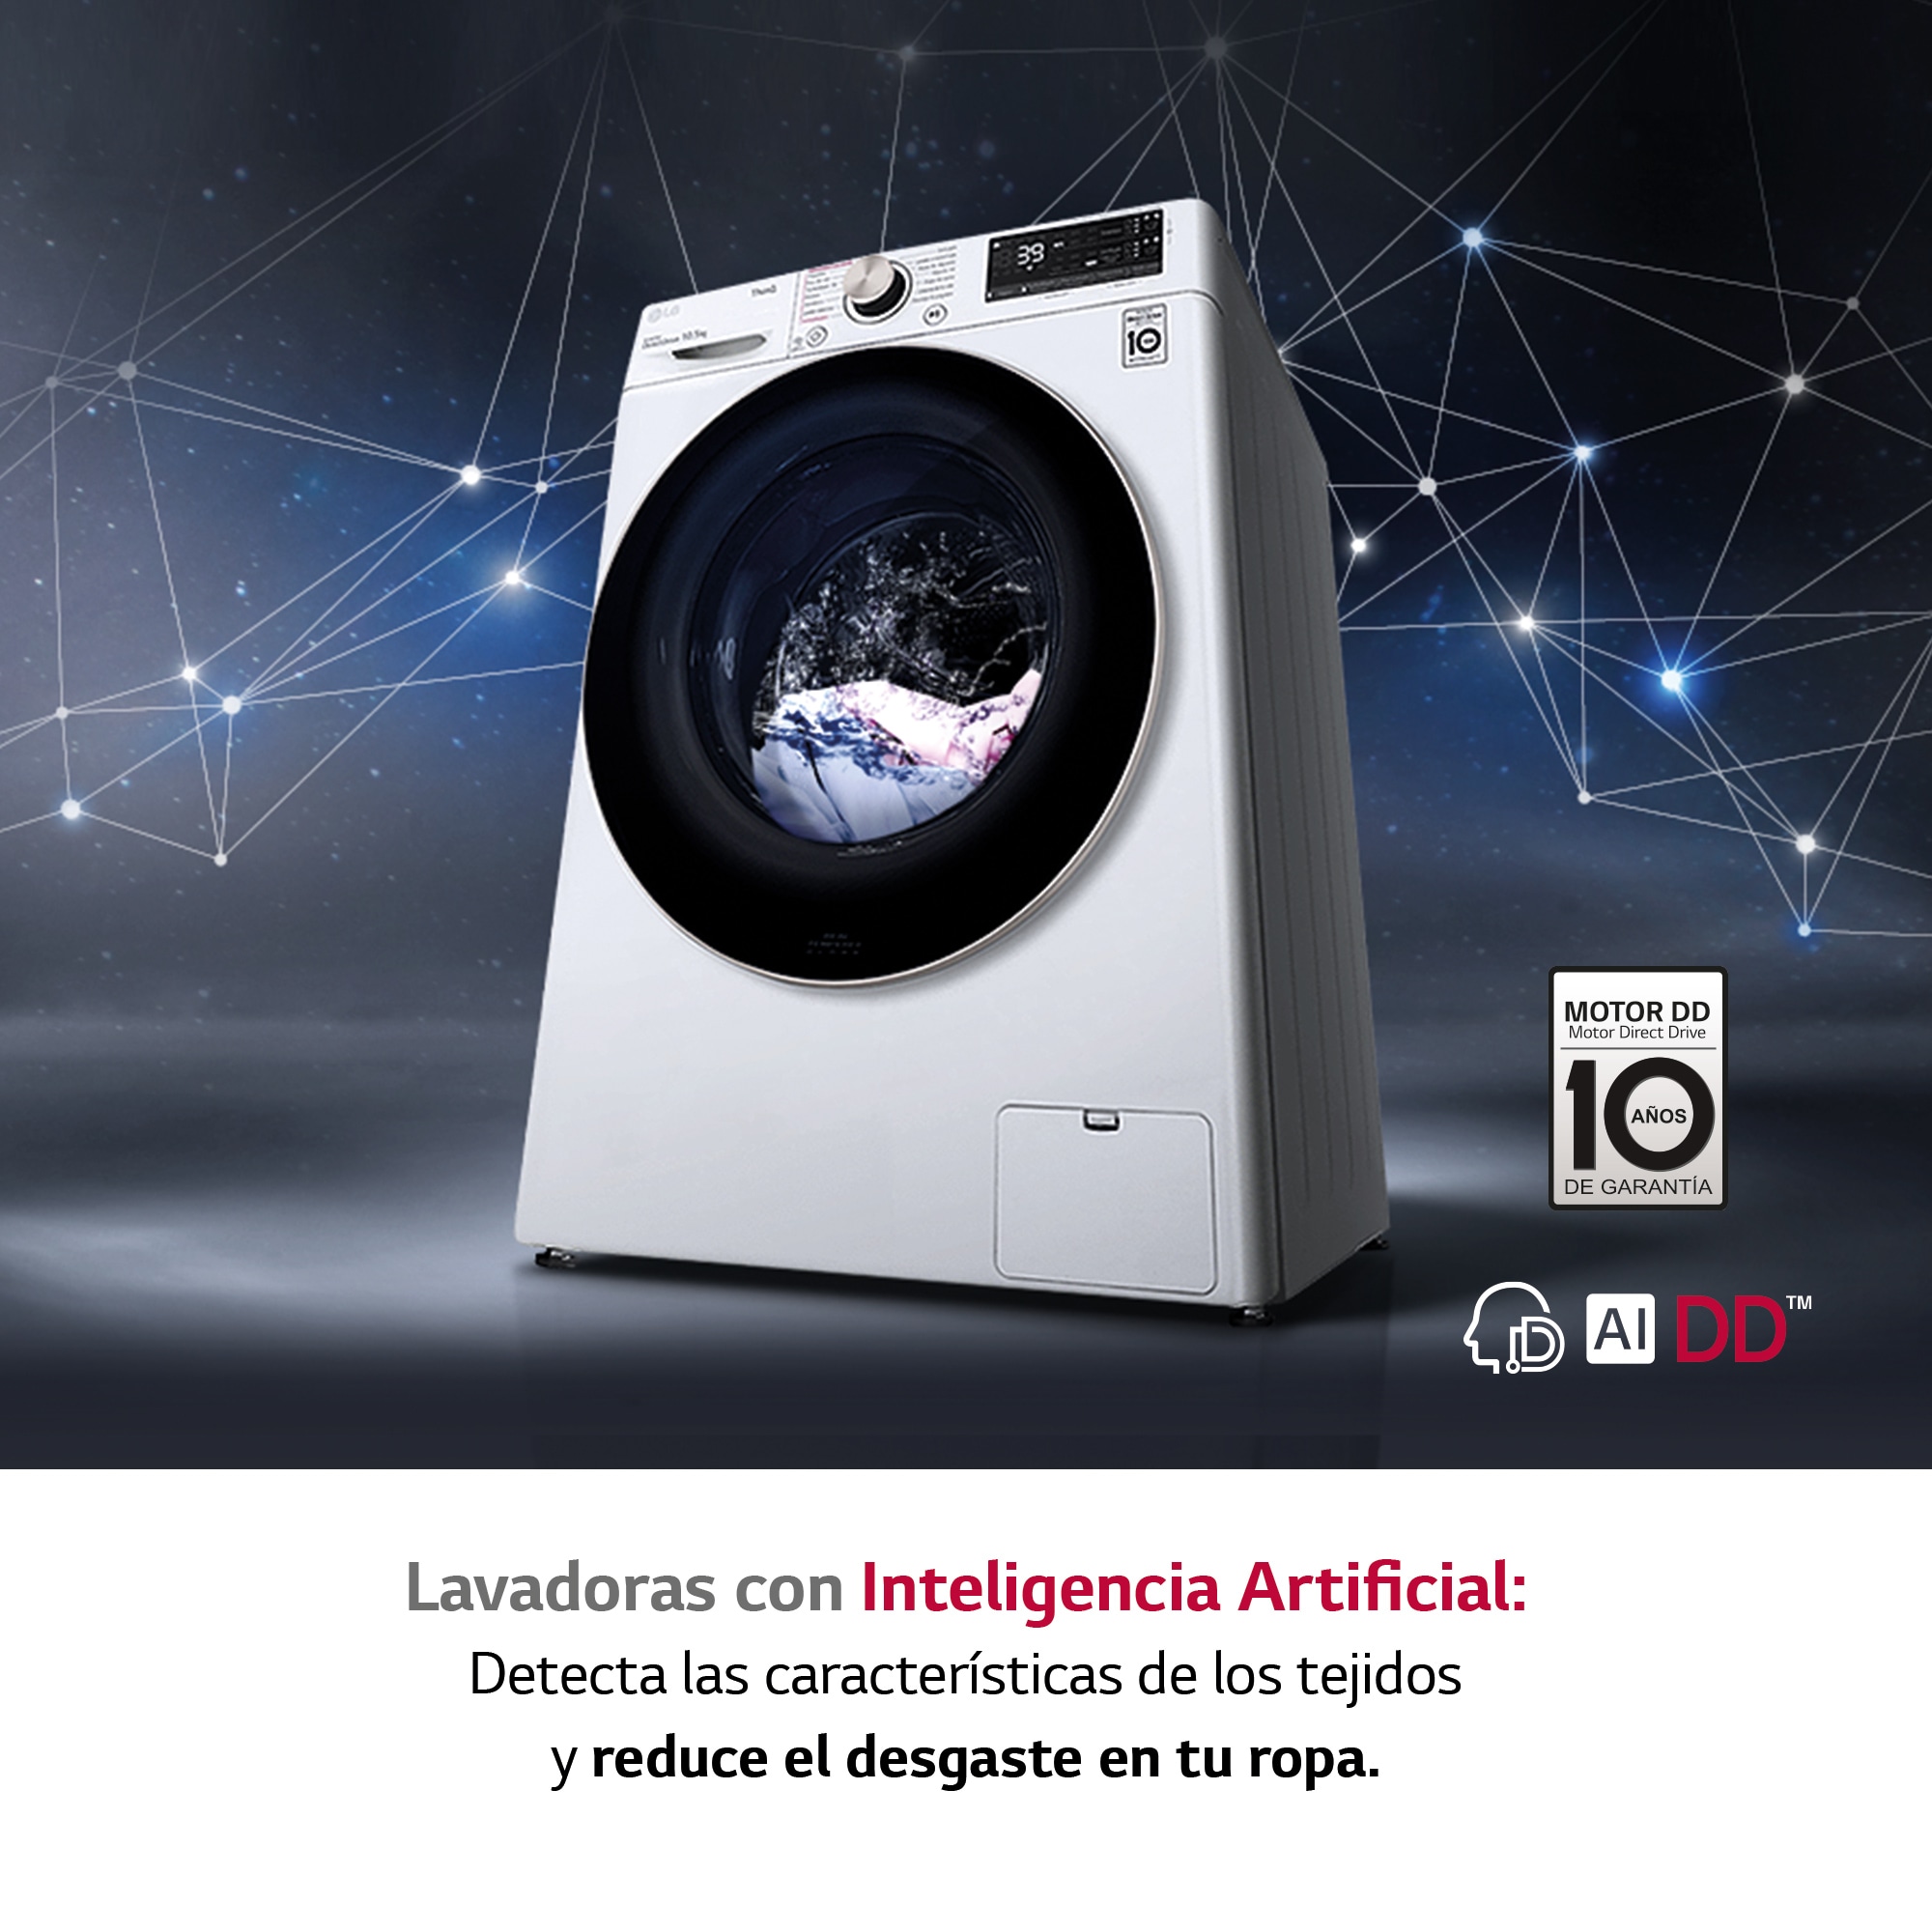 James Dyson solapa apilar Lavadora inteligente AI Direct Drive™ - F6WV7510PRW | LG España